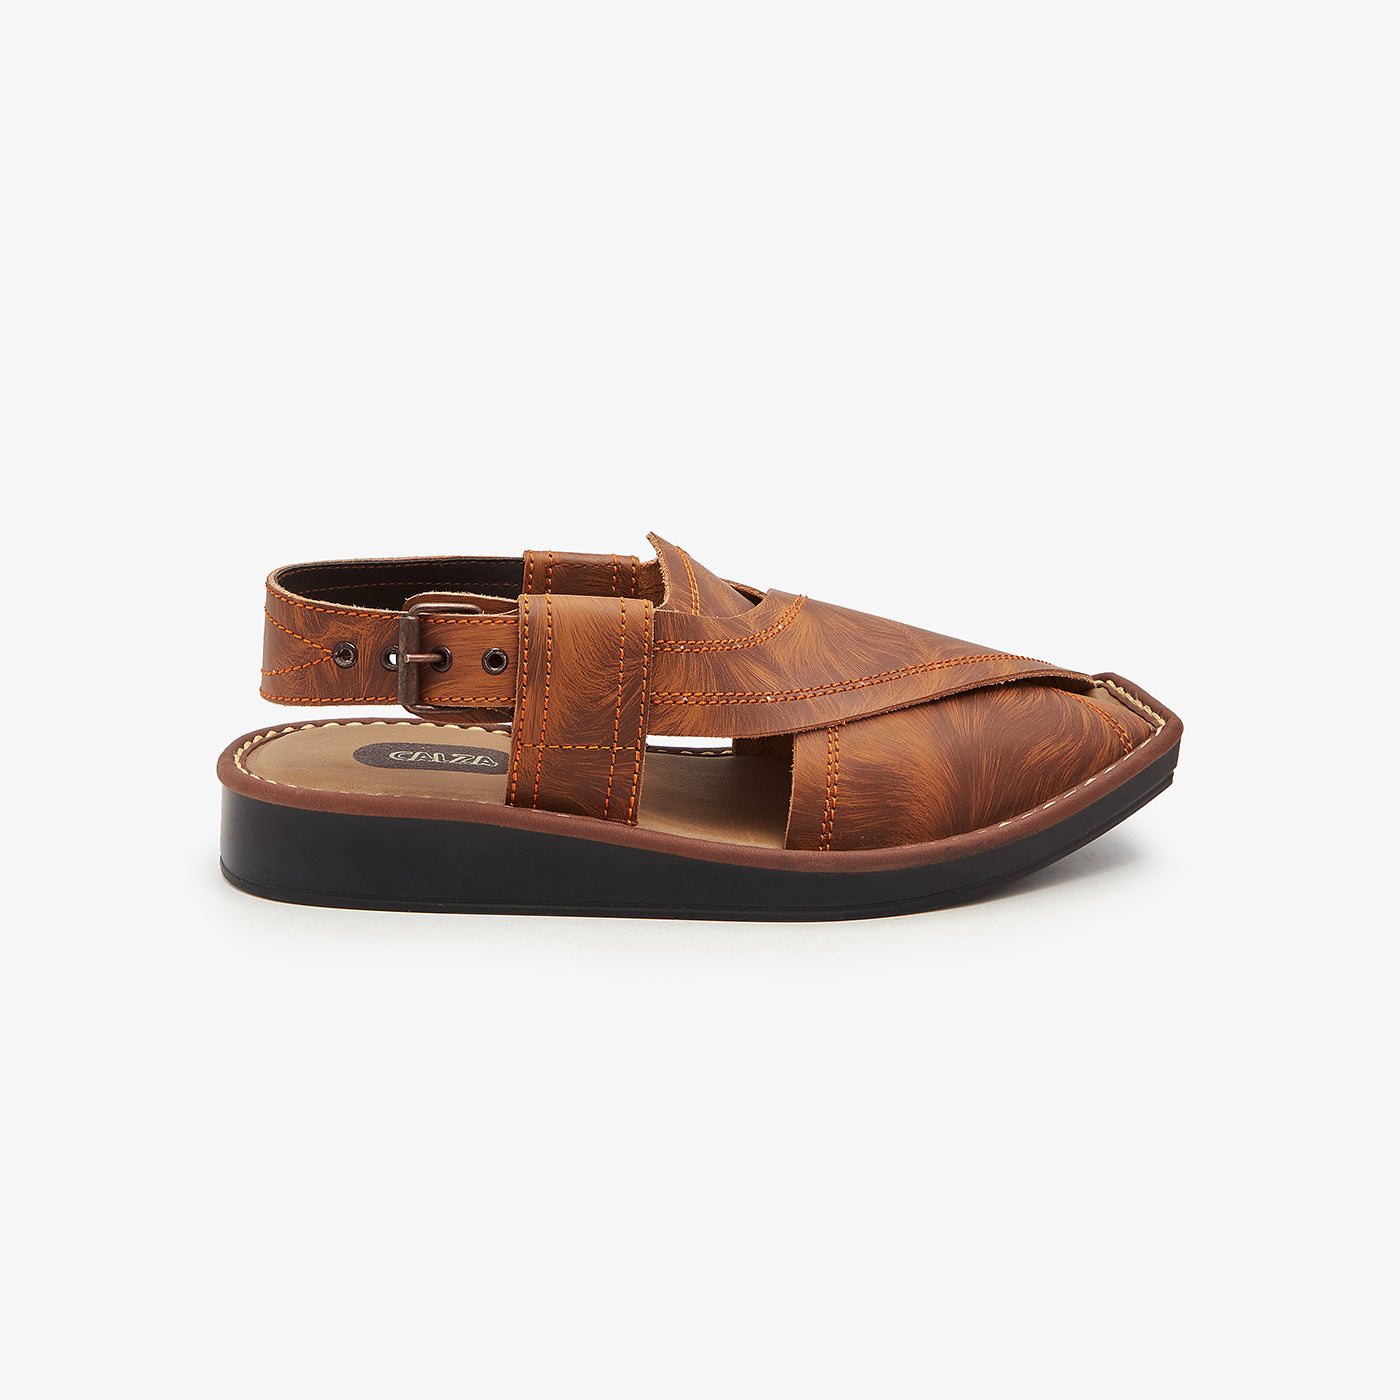 Leather Sandals for Men